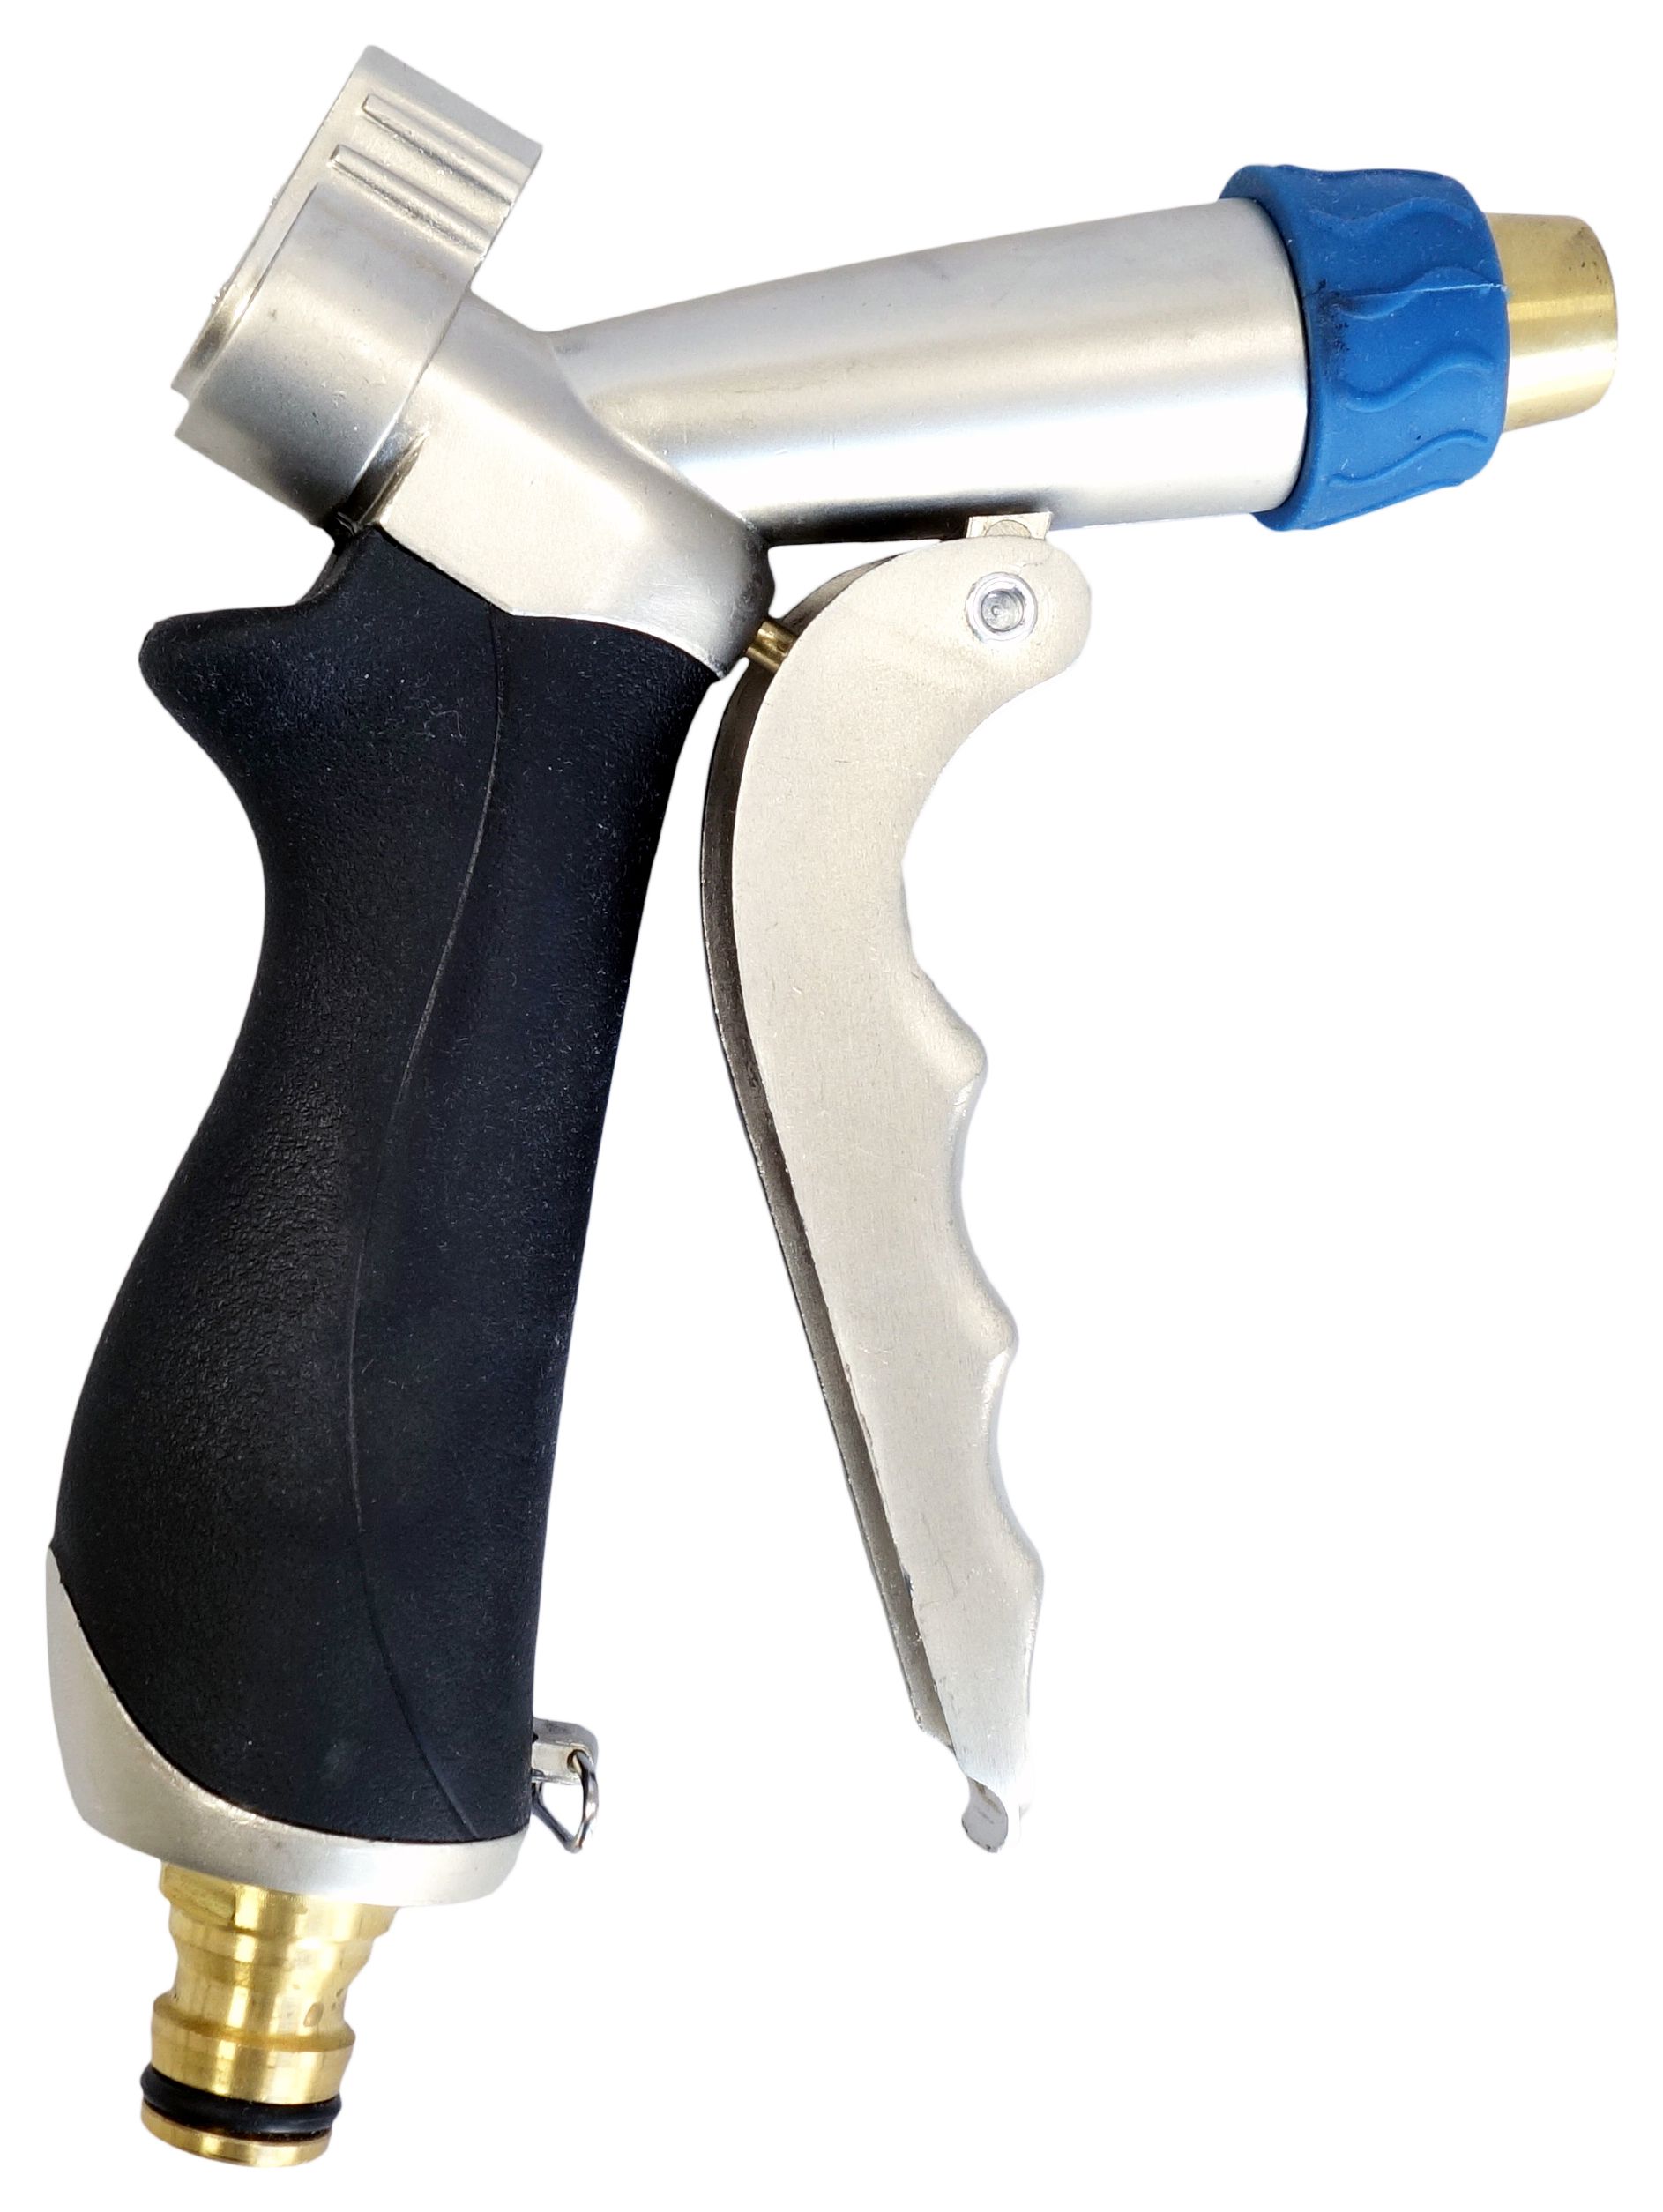 Image of Wickes Jet Spray Garden Nozzle - 2 functions